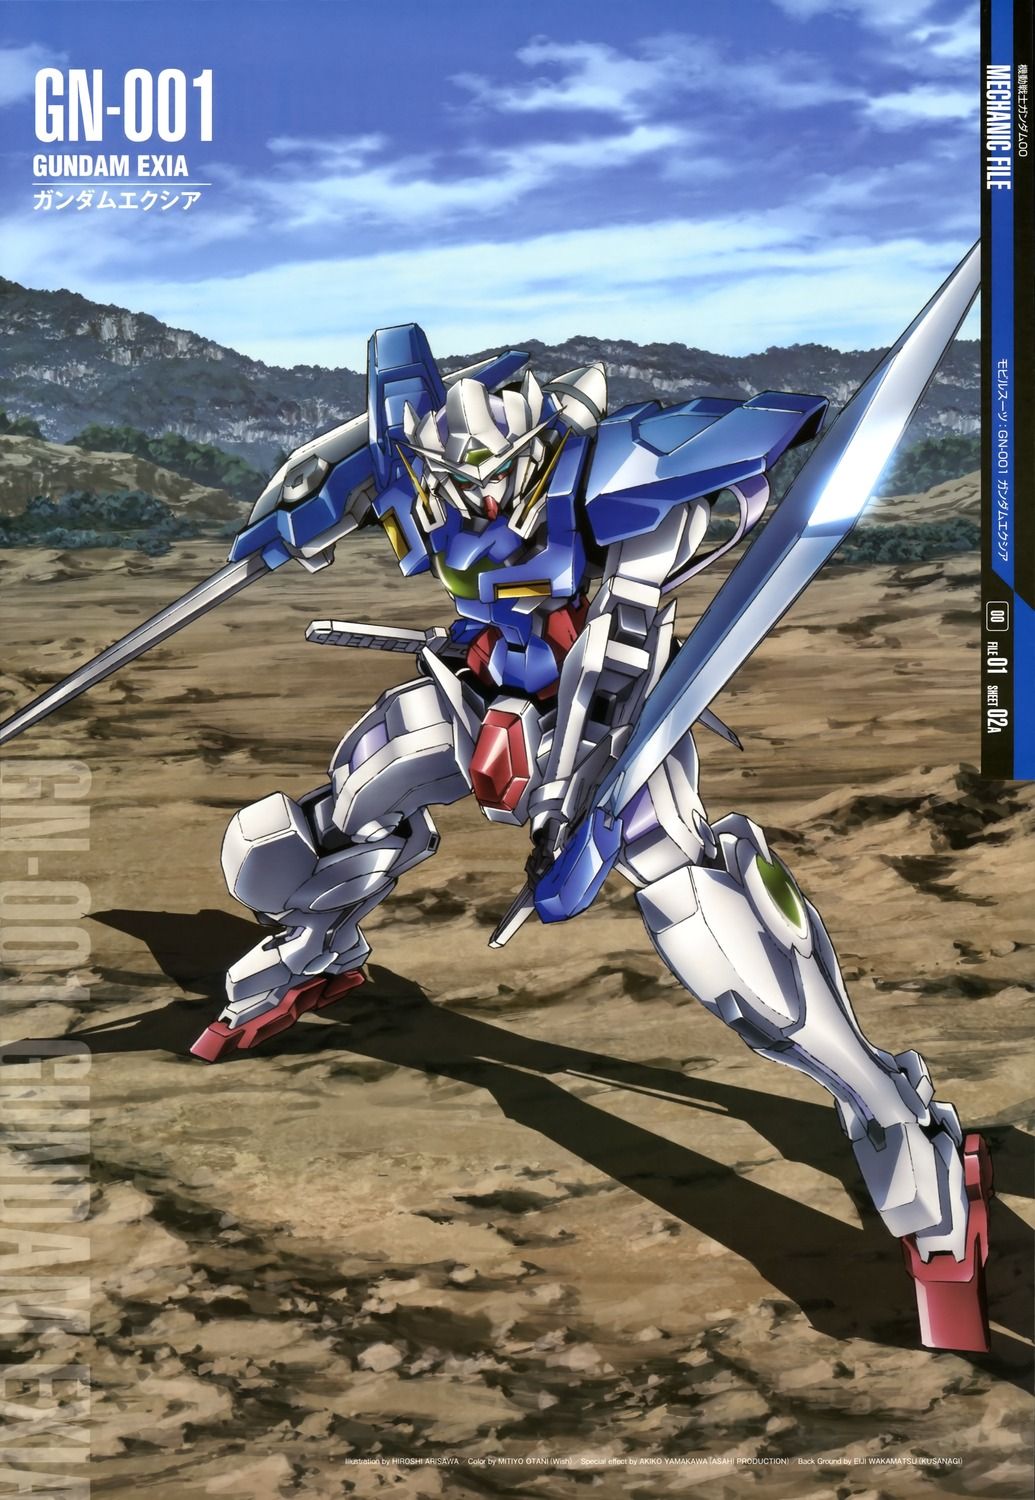 Plamo Hub: Mobile Suit Gundam 00 Wallpaper